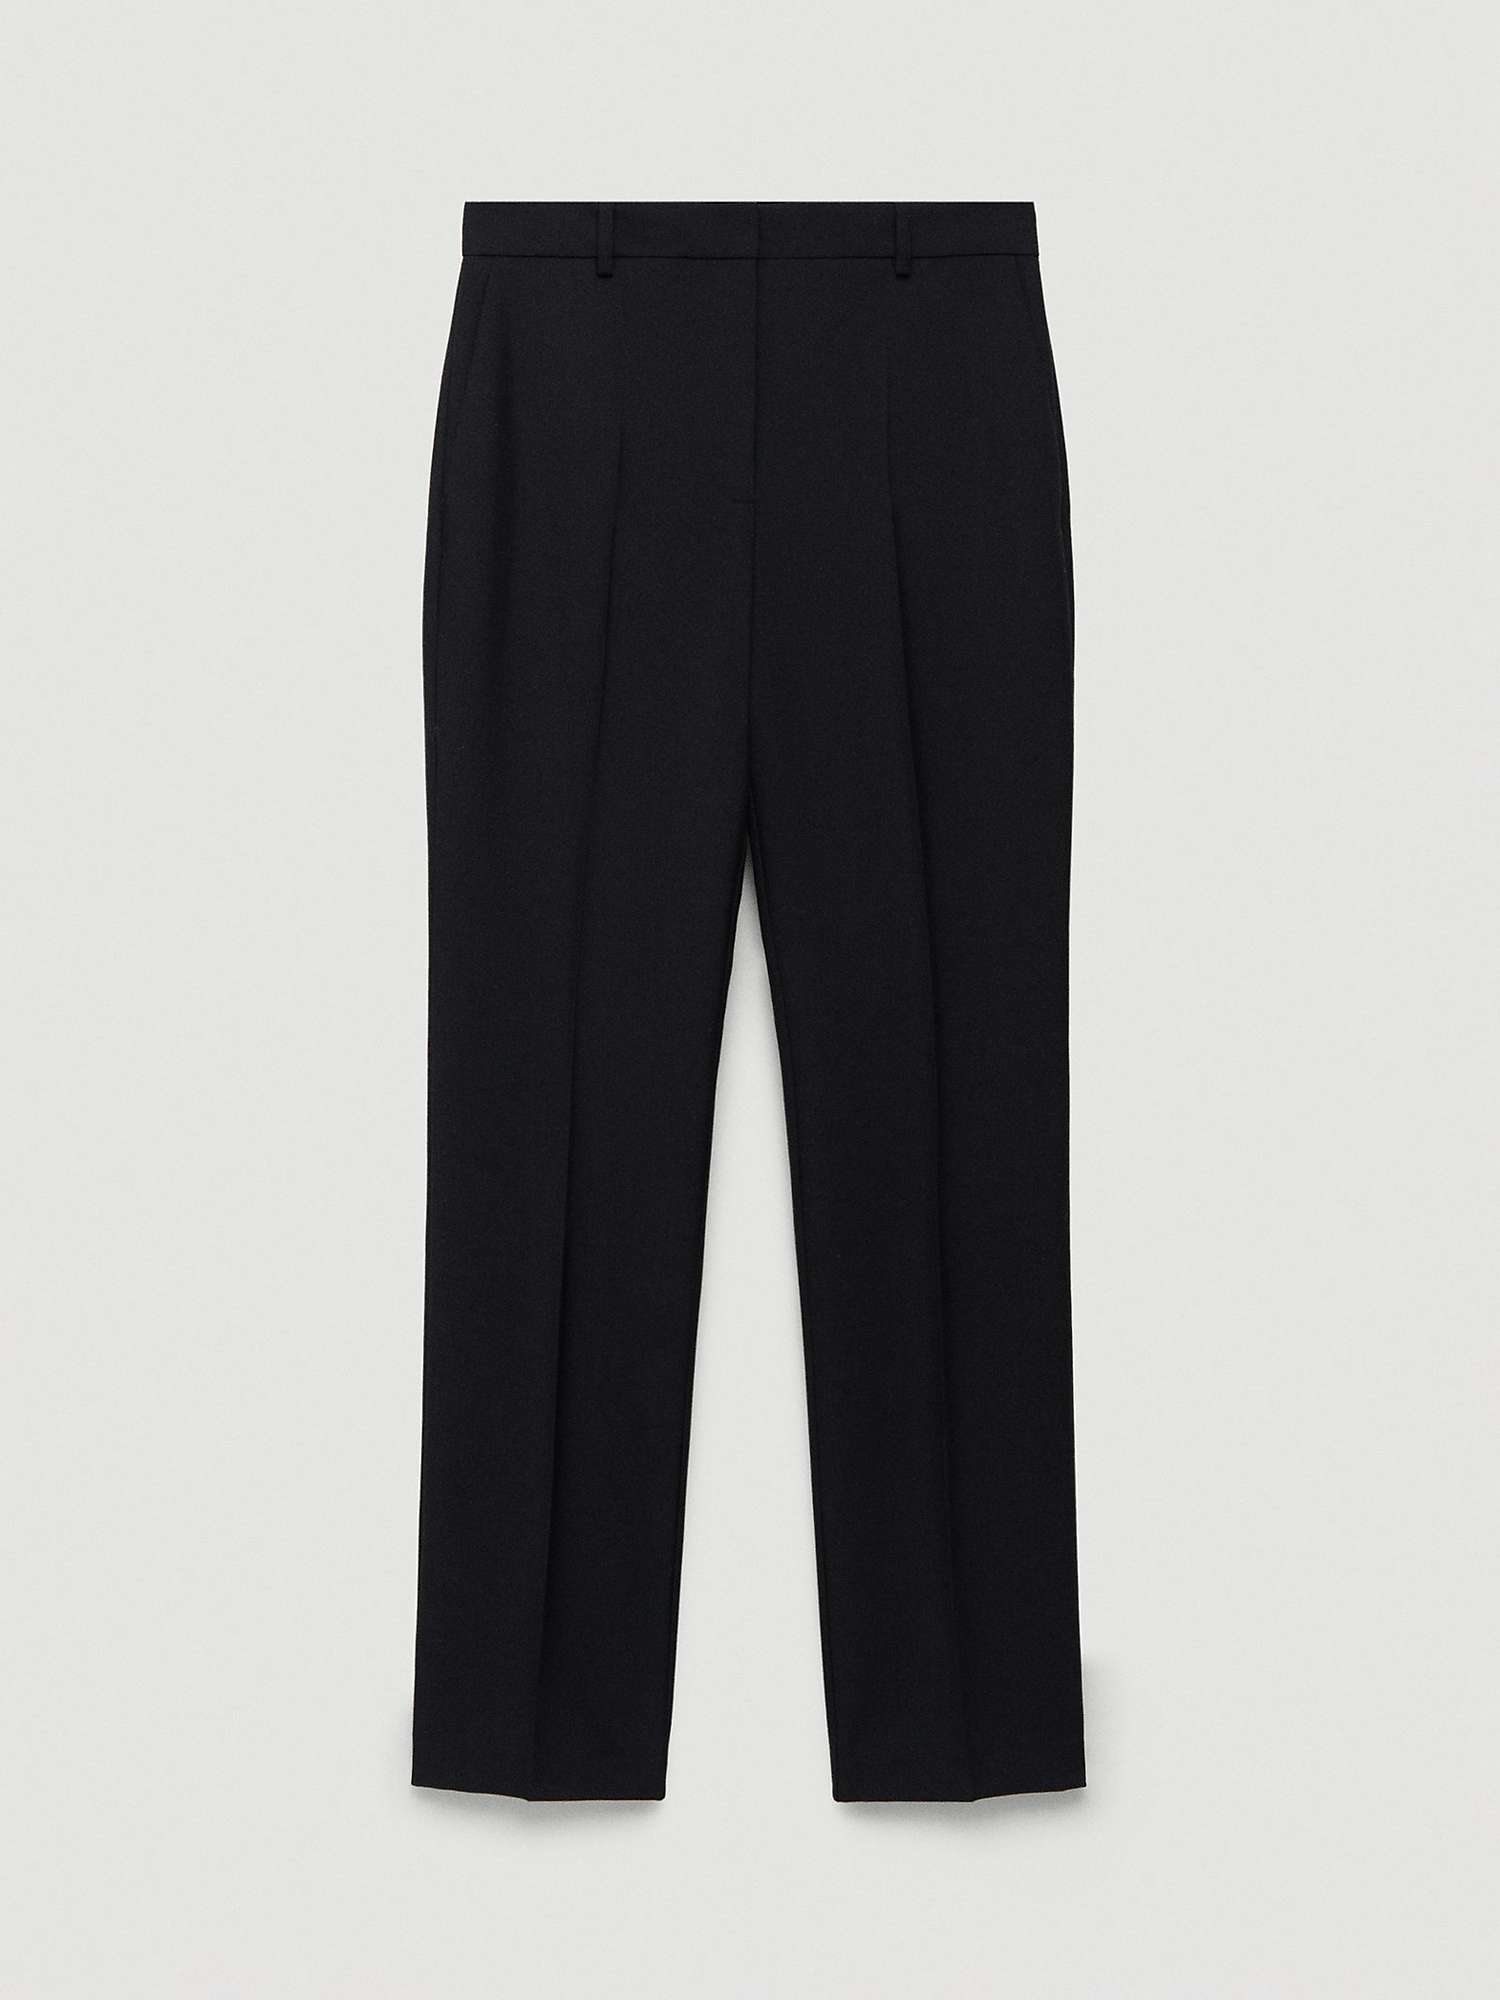 Buy Mango Jordan Wool Blend Suit Trousers, Black Online at johnlewis.com